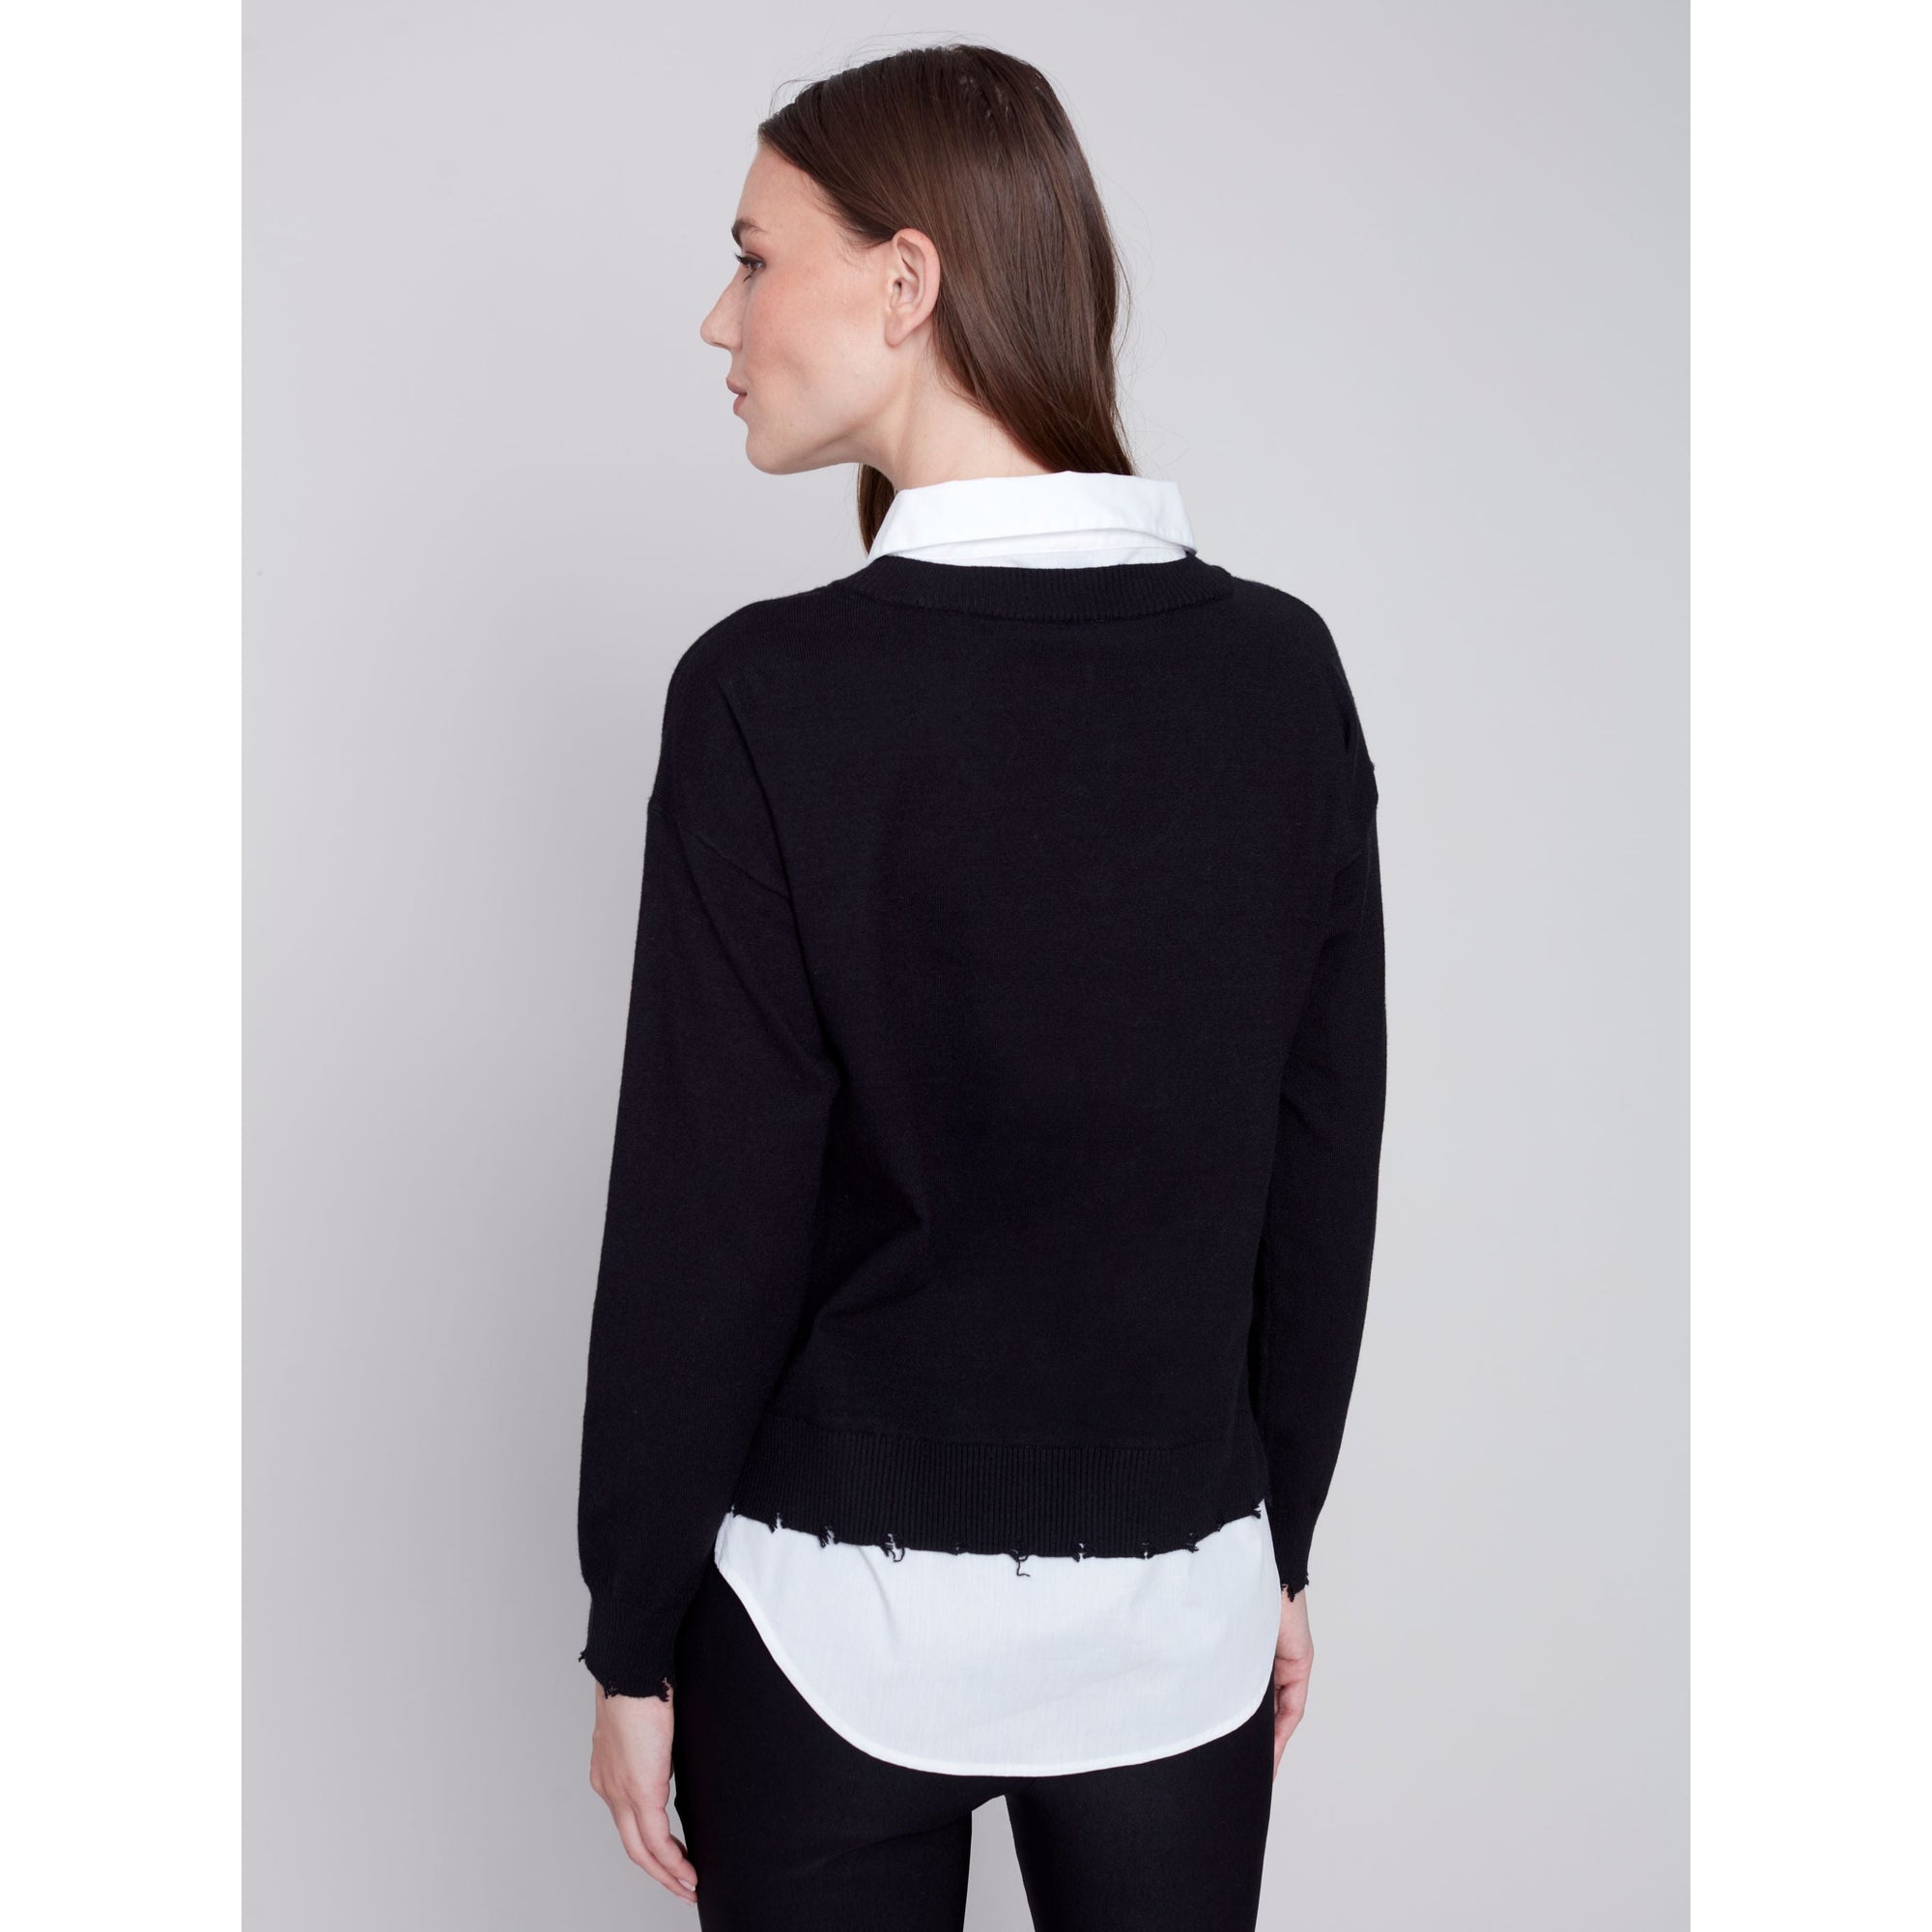 V NECK FOOLER SWEATER-Jackets & Sweaters-CHARLIE B-SMALL-Black-Coriander